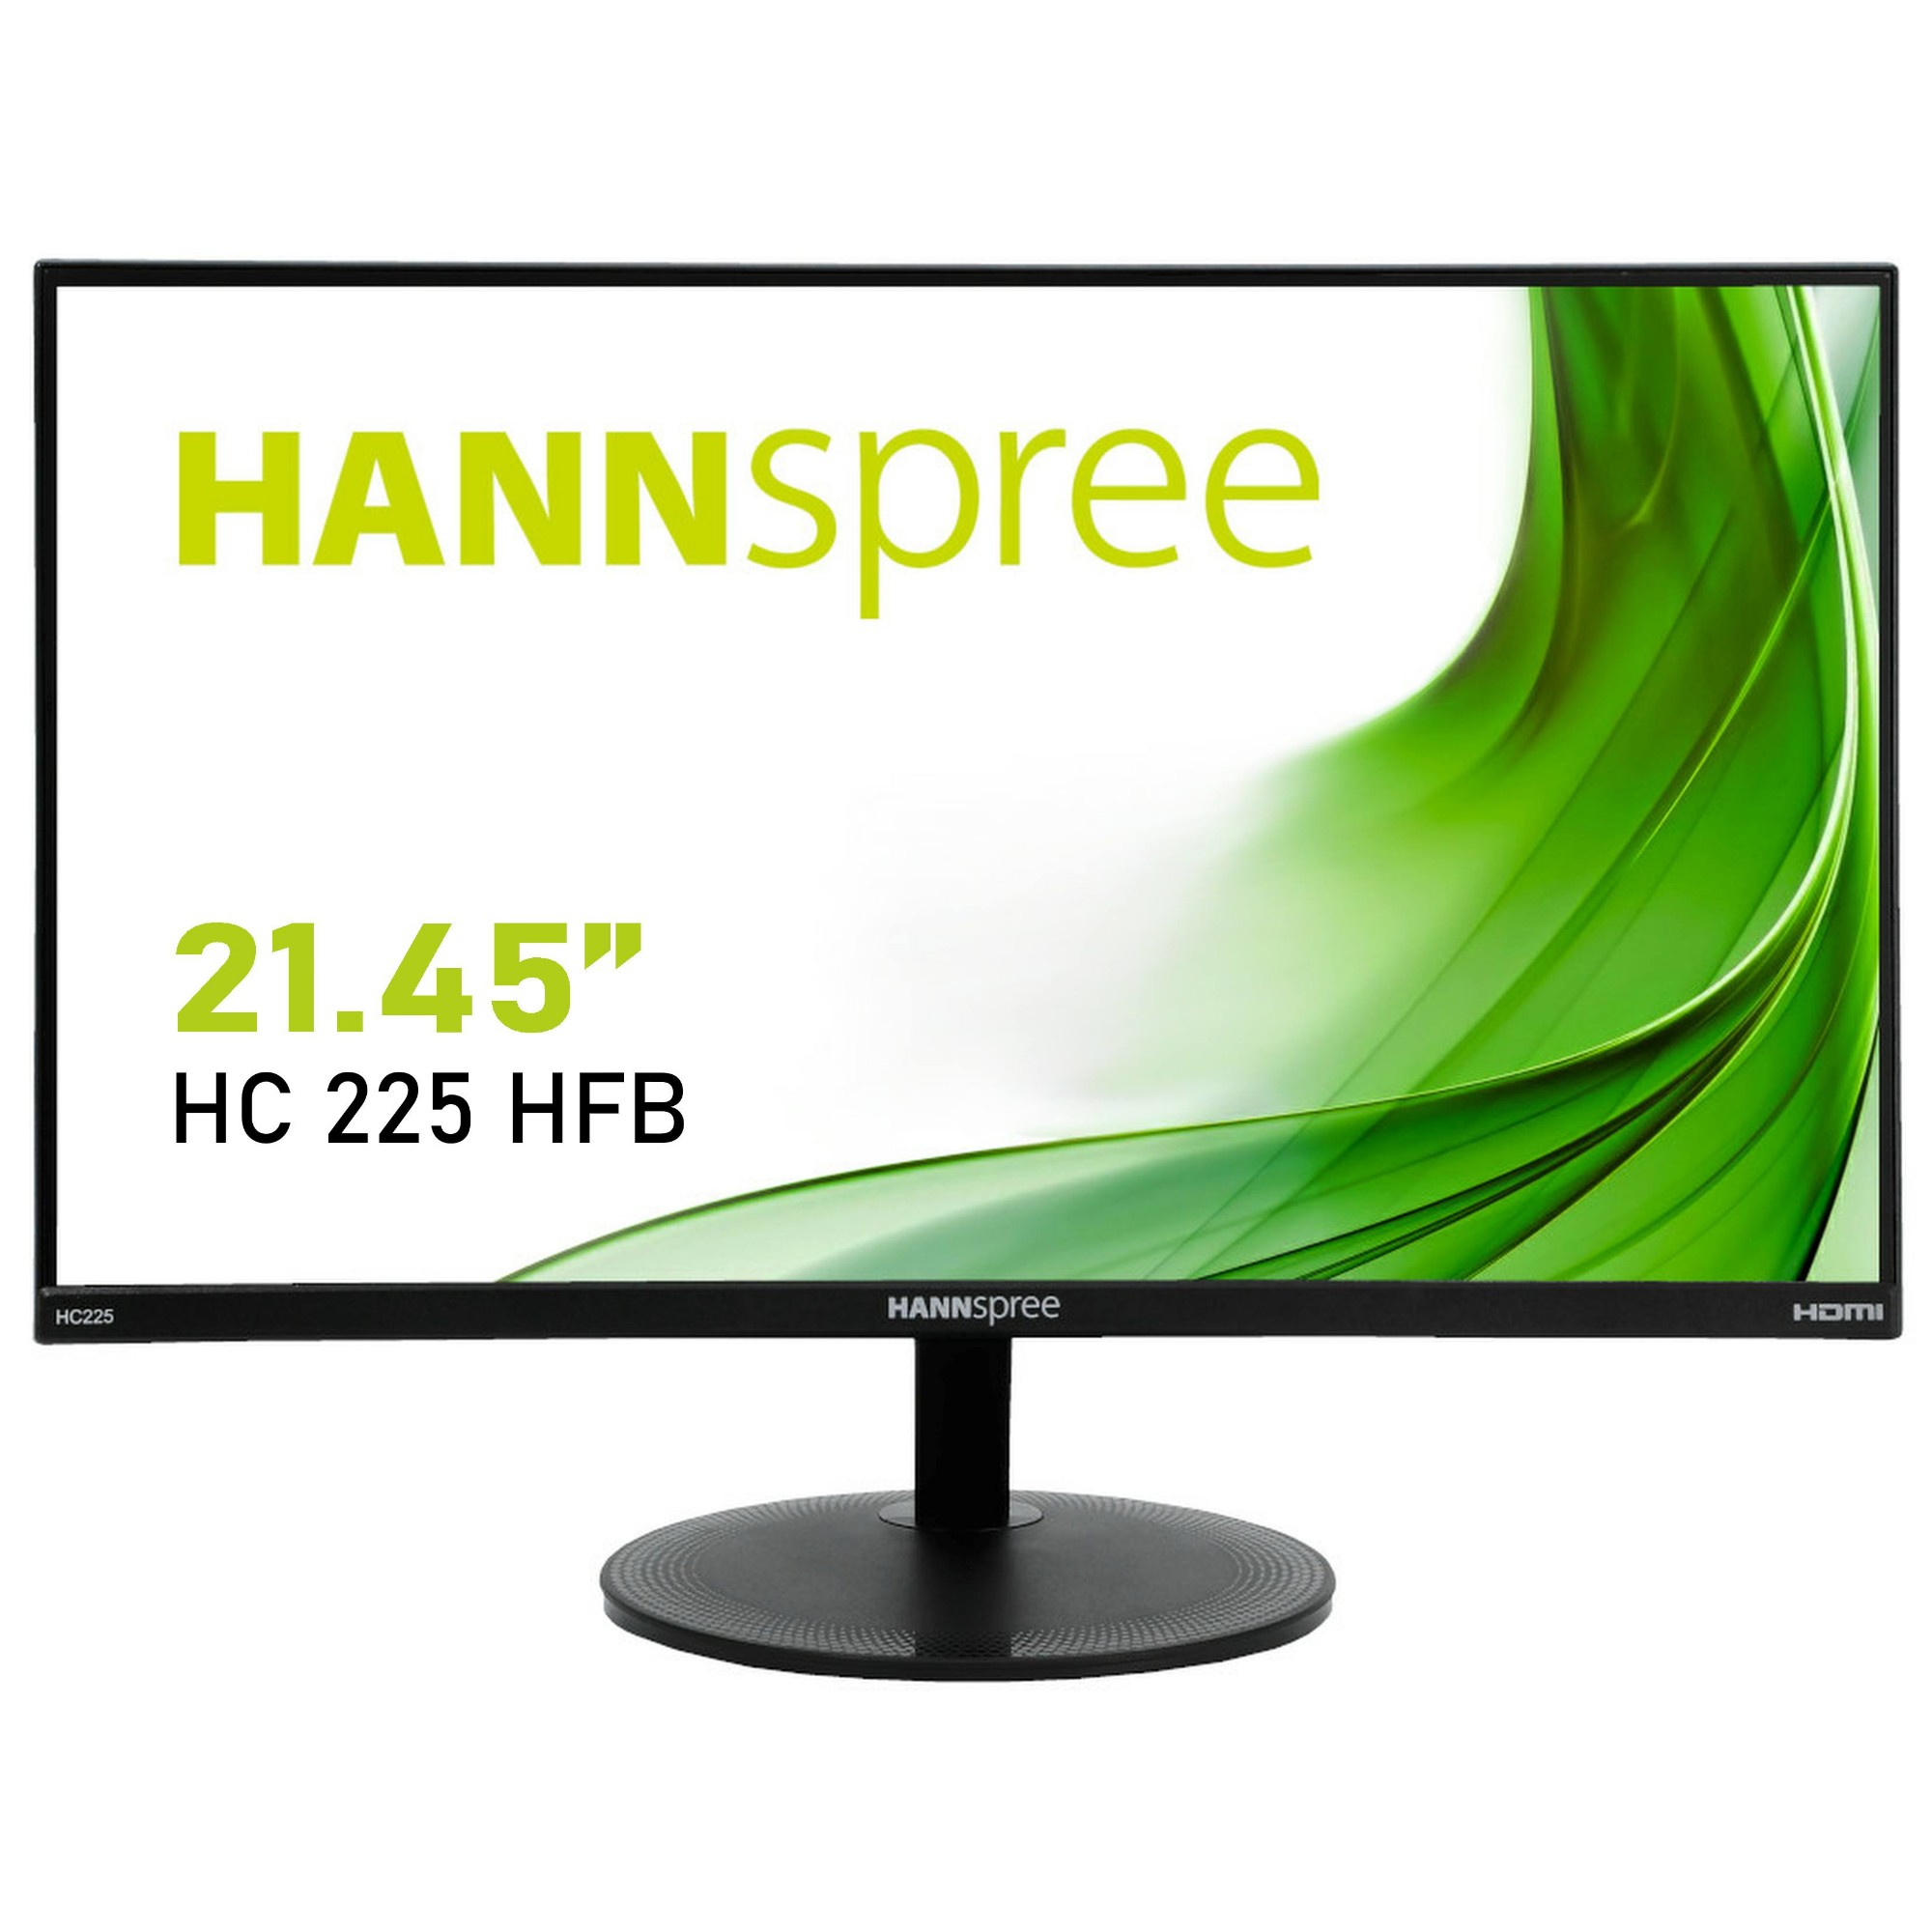 Hannspree HC 225 HFB 54.5 cm (21.4